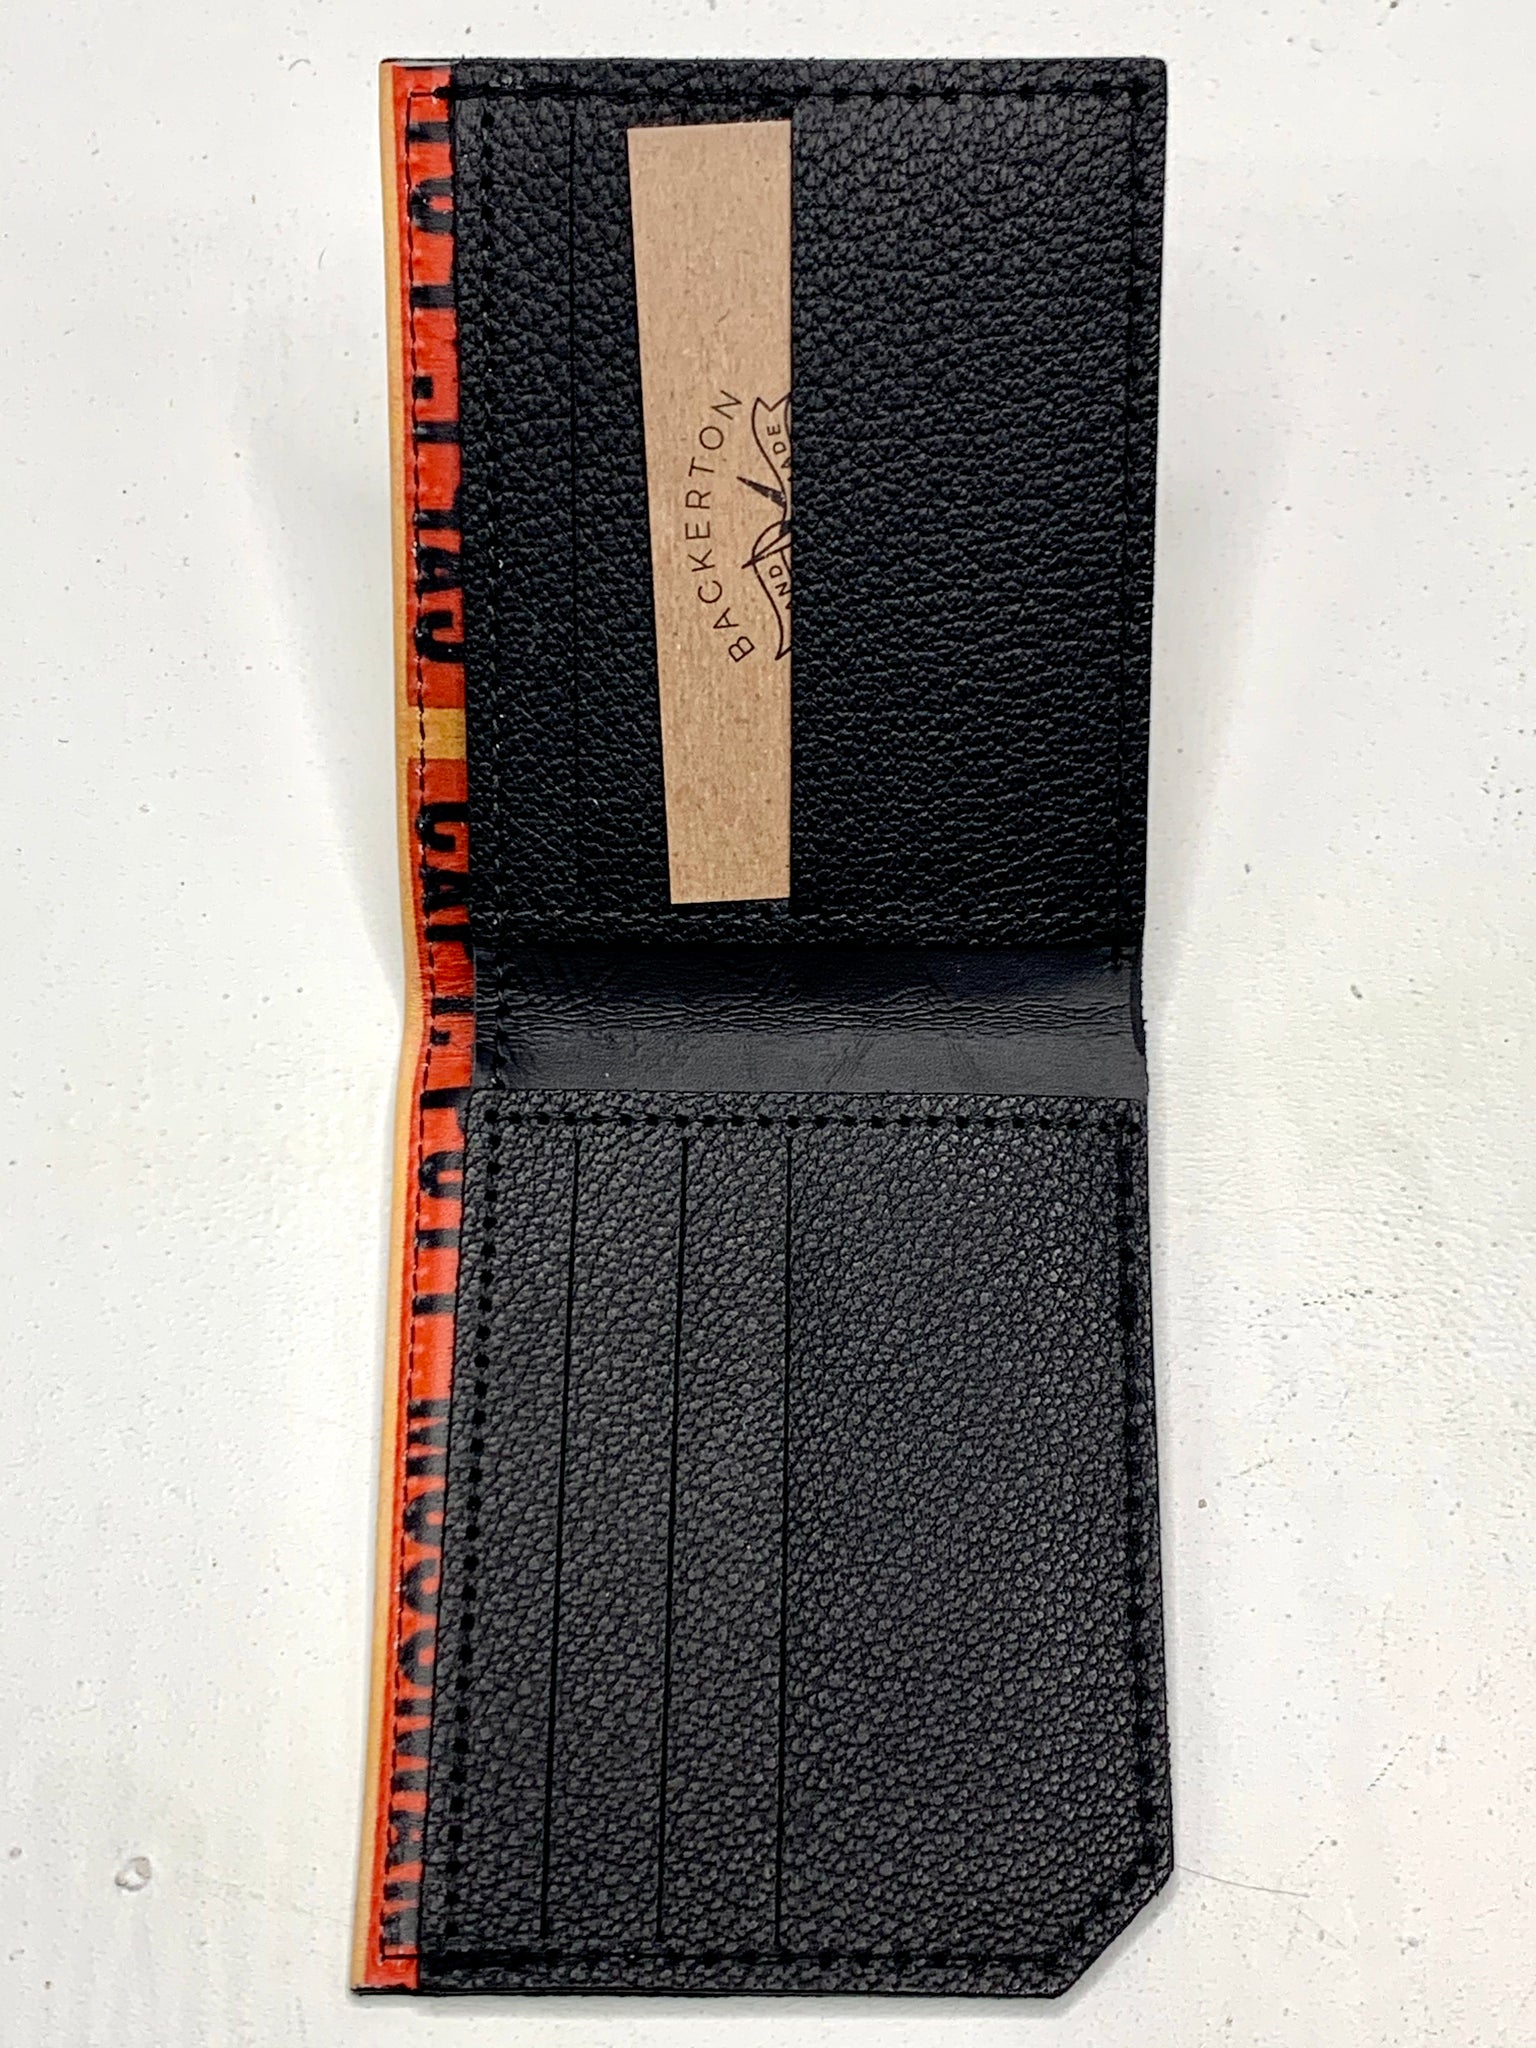 Dare-Devils Handmade Leather Wallet